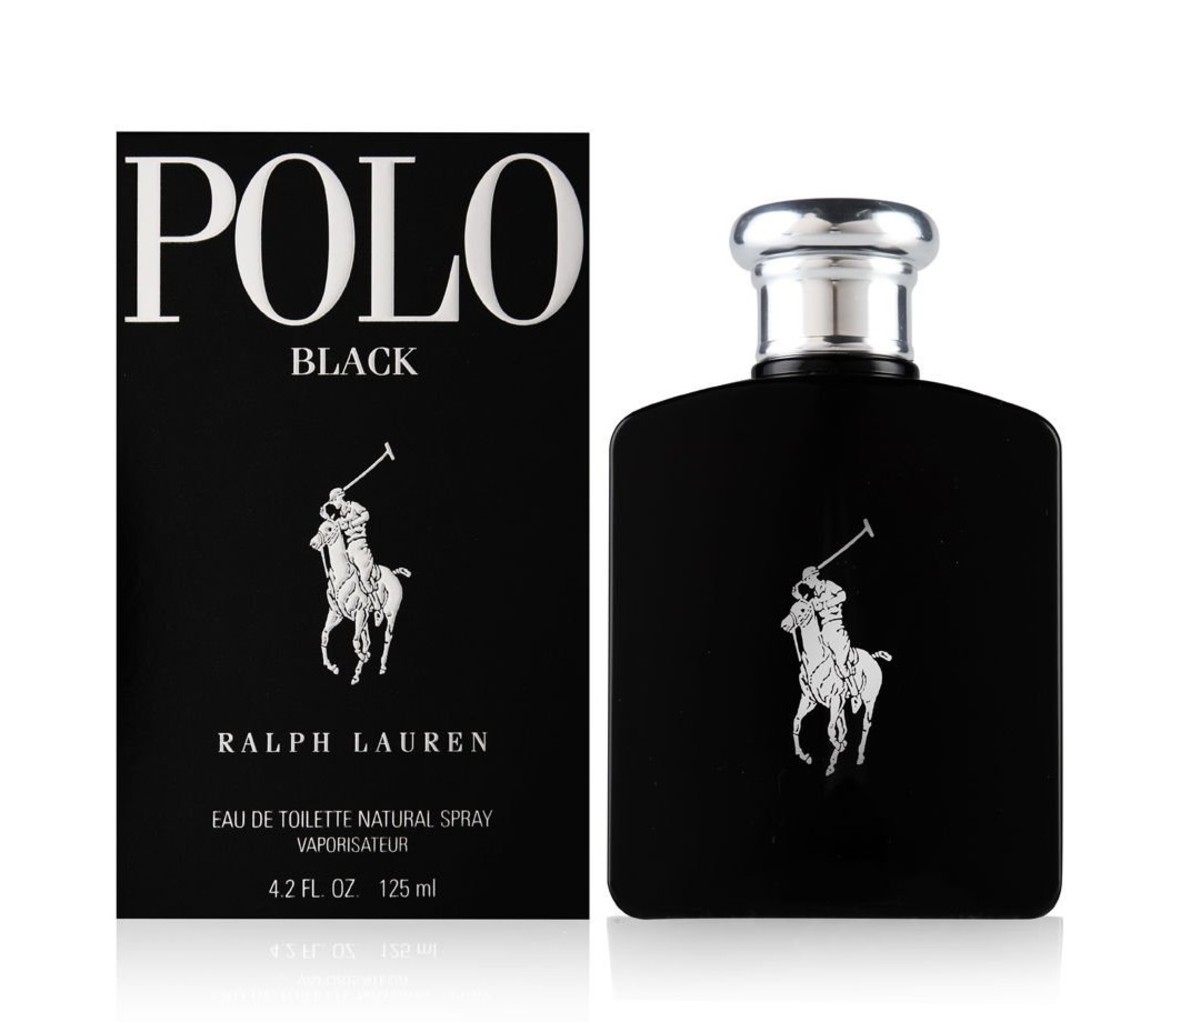 2. Polo Black by Ralph Lauren